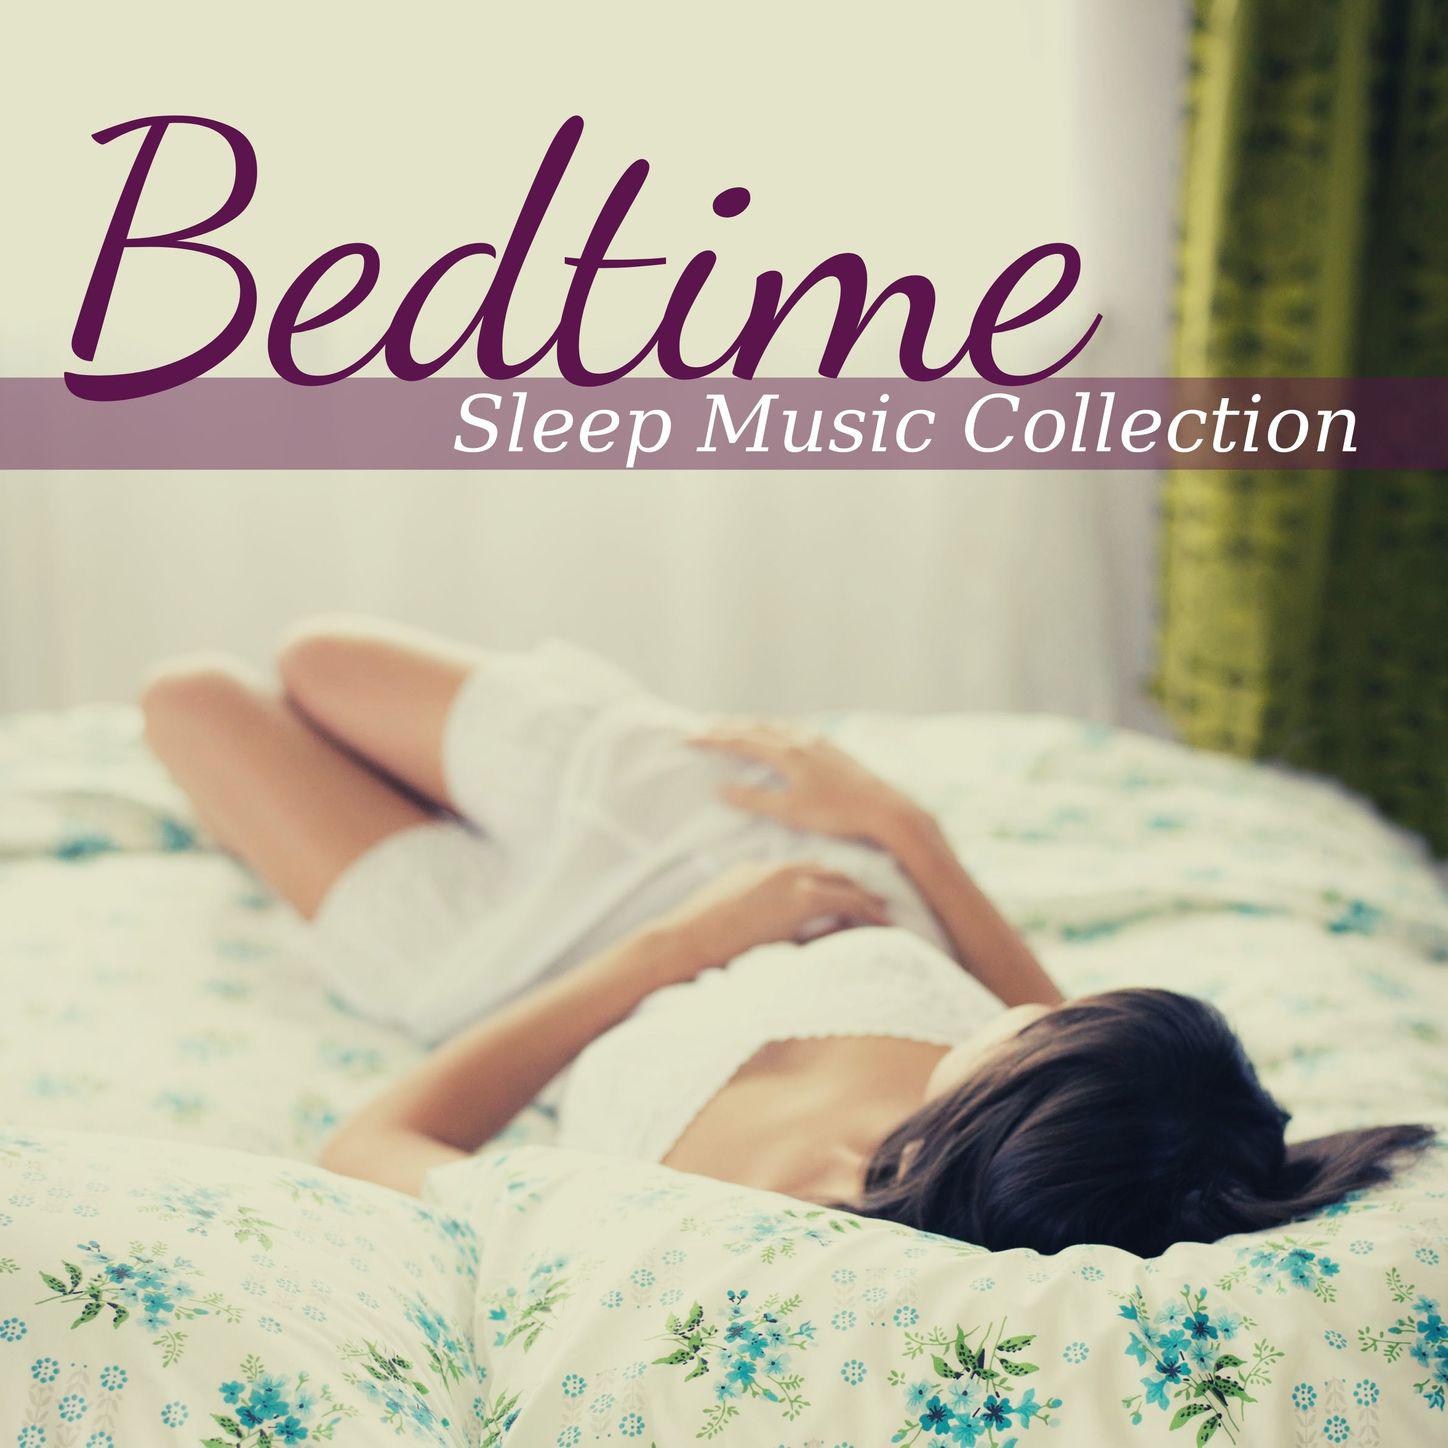 Bedtime: Sleep Music Collection